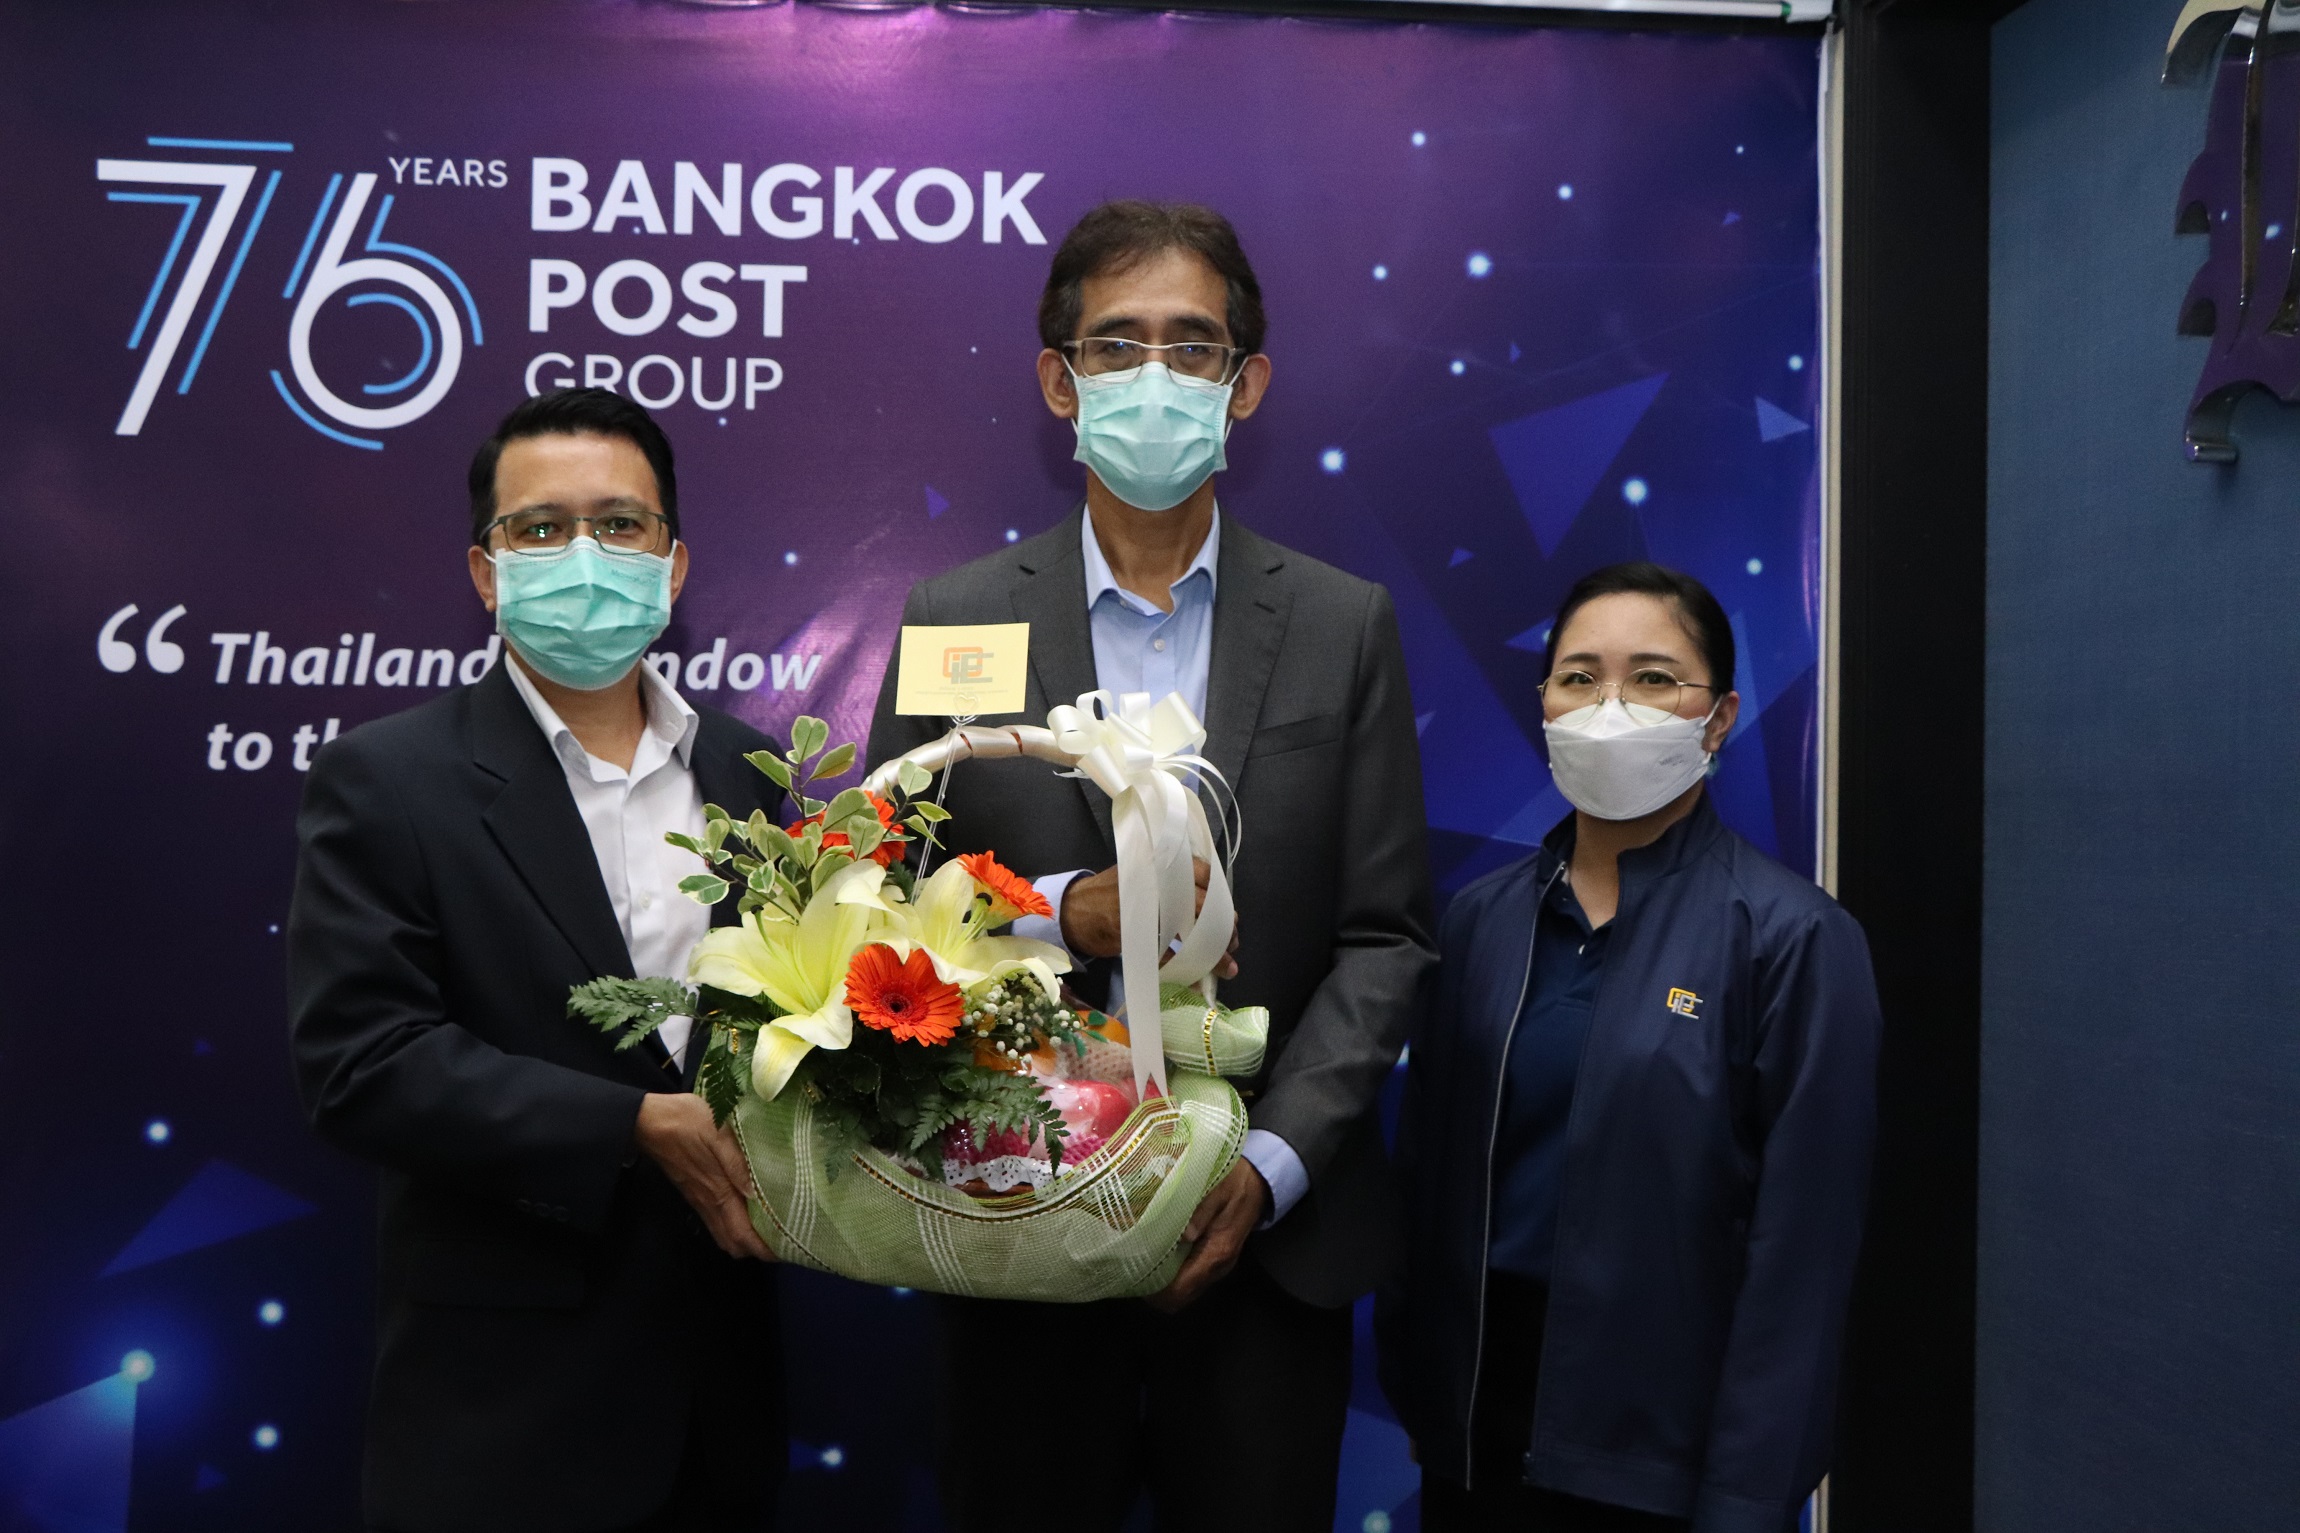 OIE Congratulates on the 76th Anniversary of the Bangkok Post